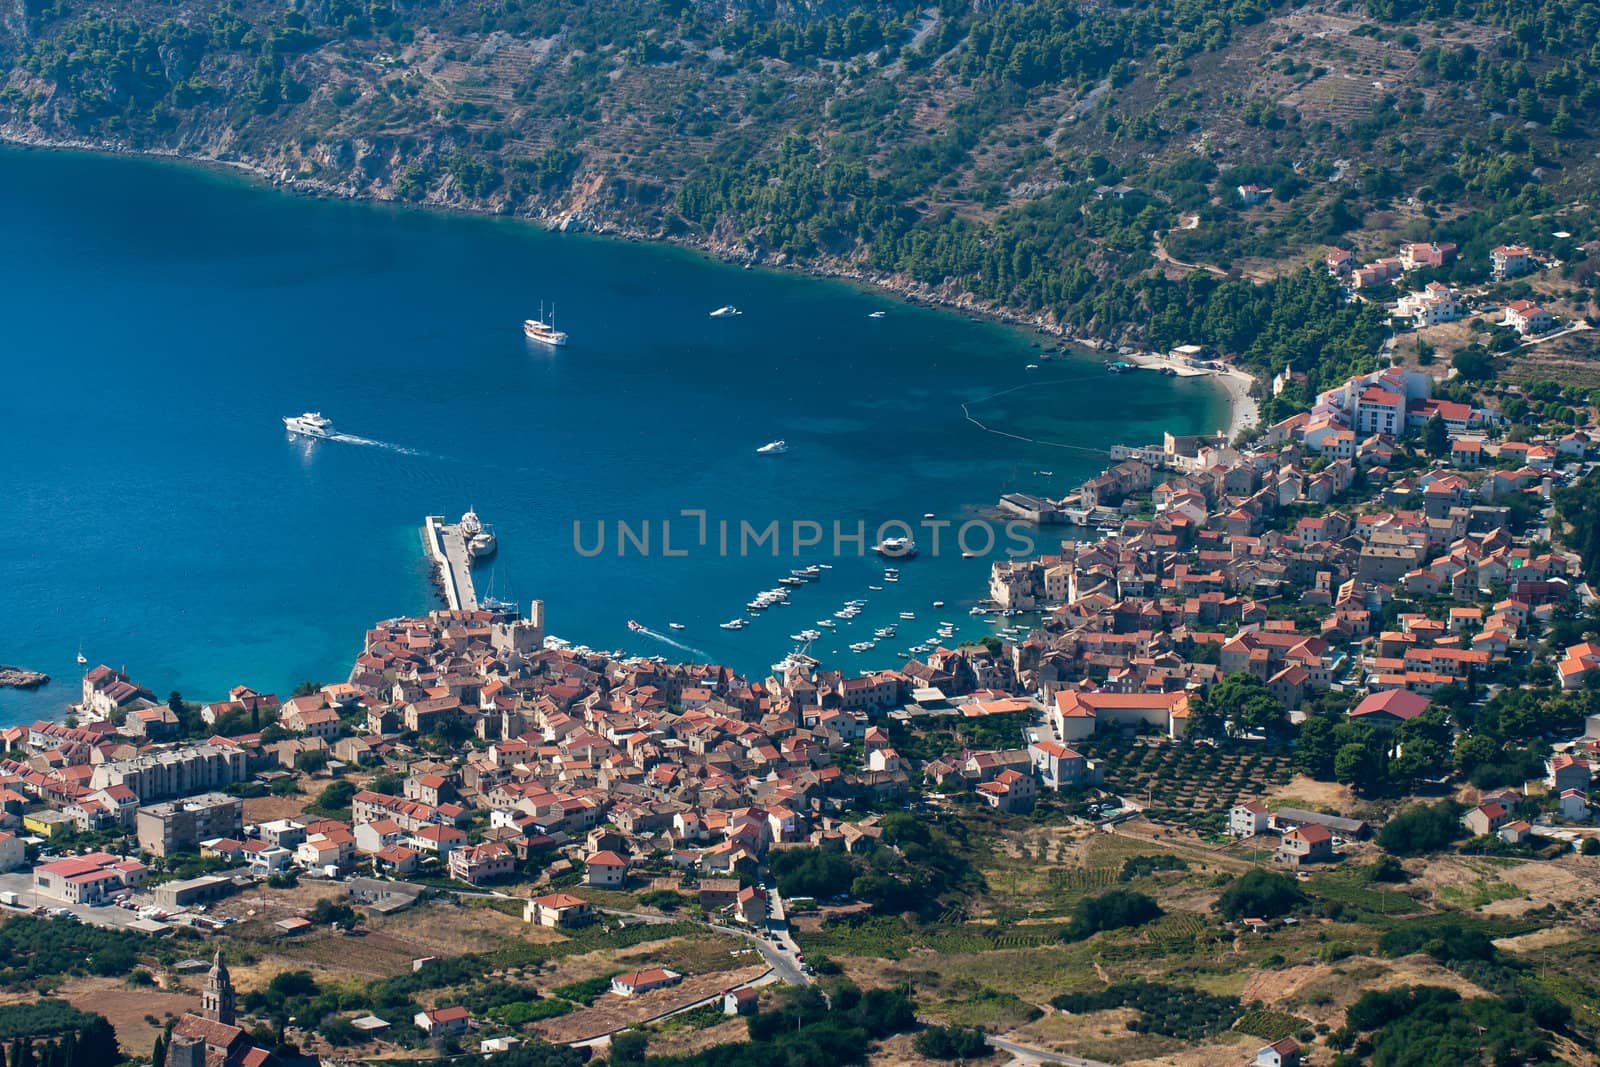 aerial view to the komiza town in Croatia